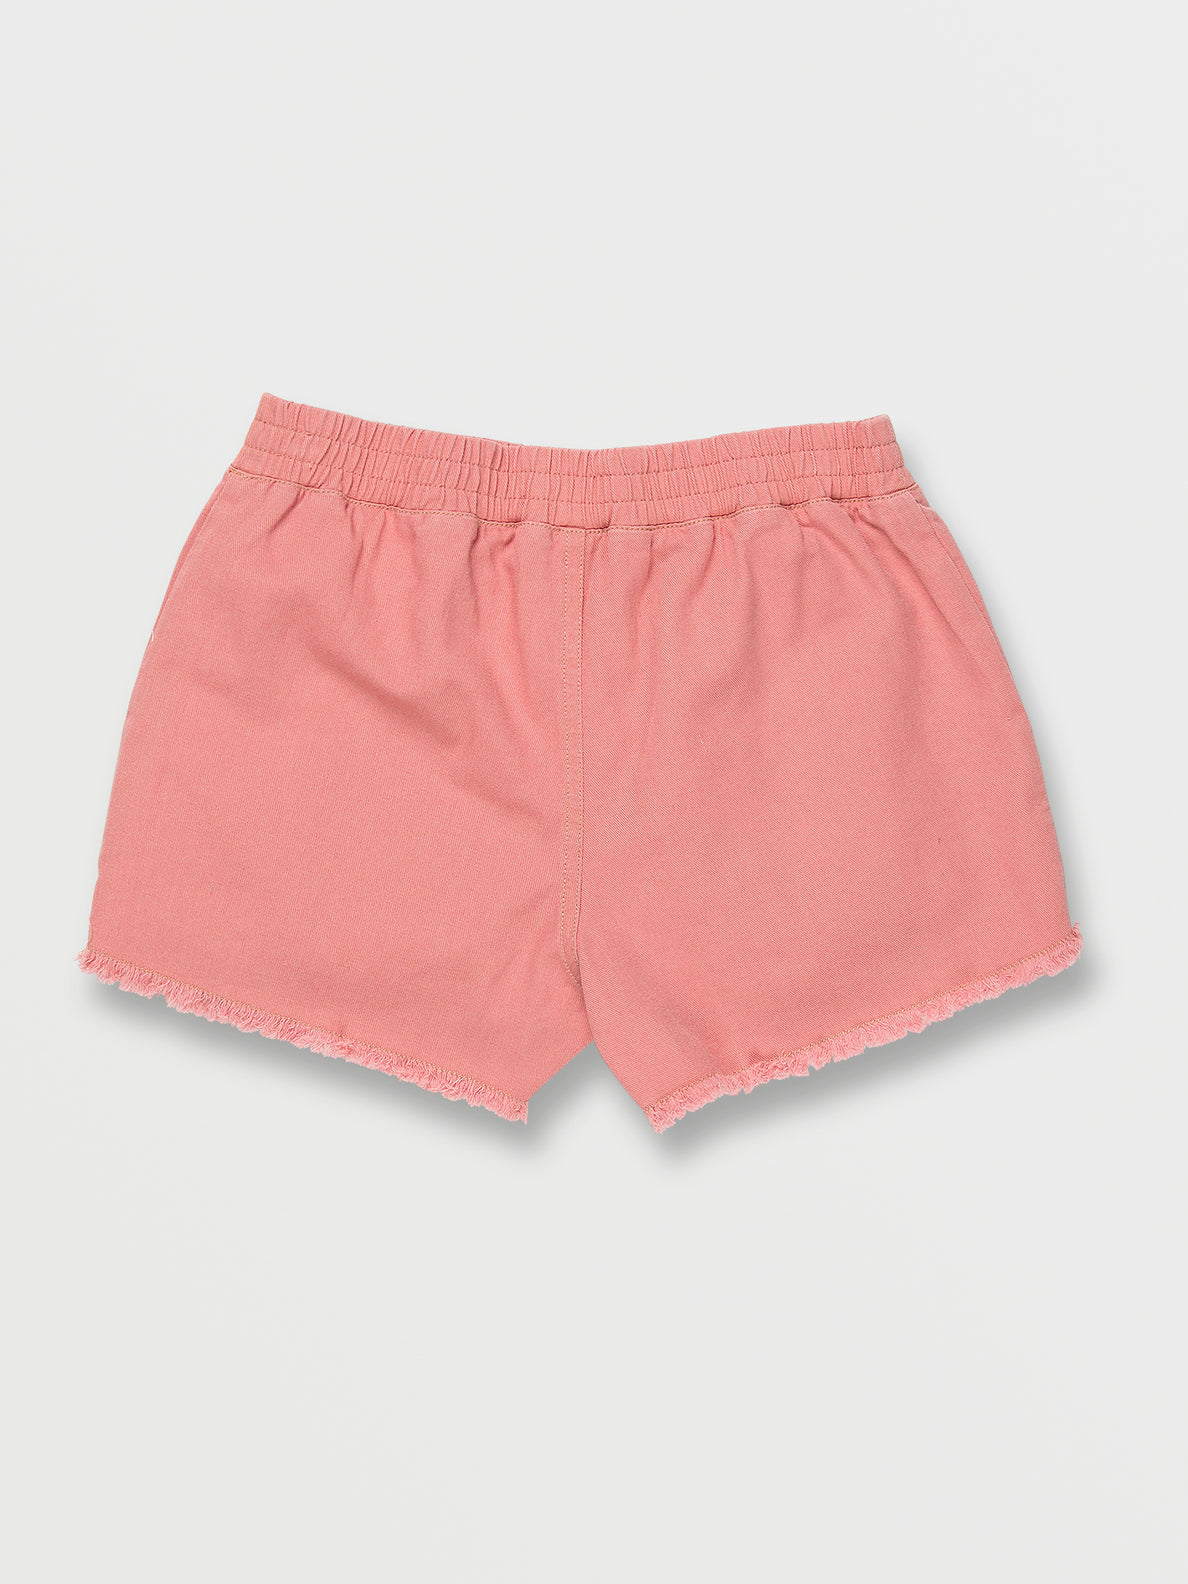 Girls Strutin Stone Shorts - Desert Pink